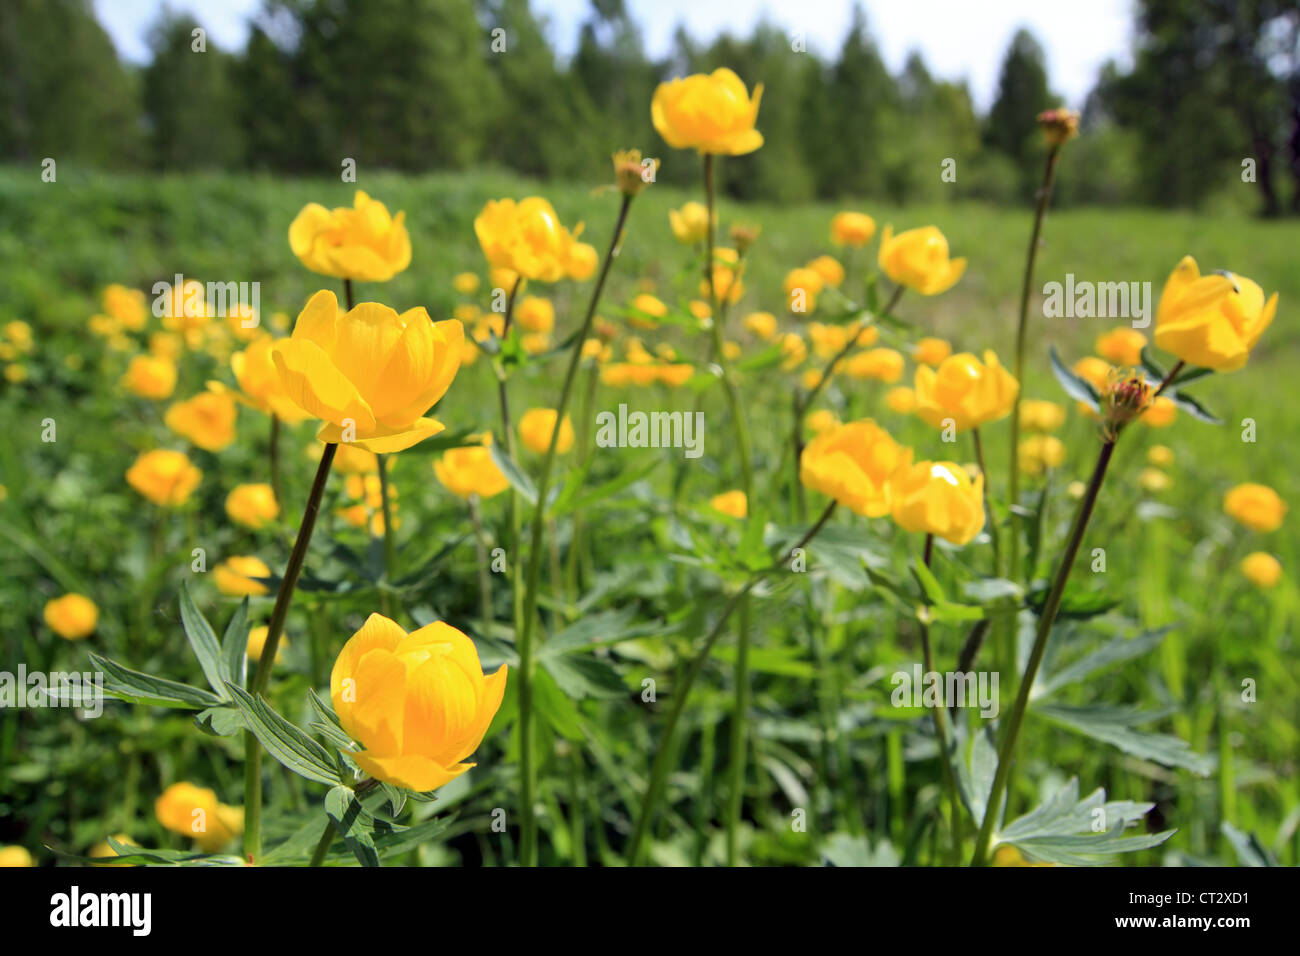 globe-flower on spring green field Stock Photo